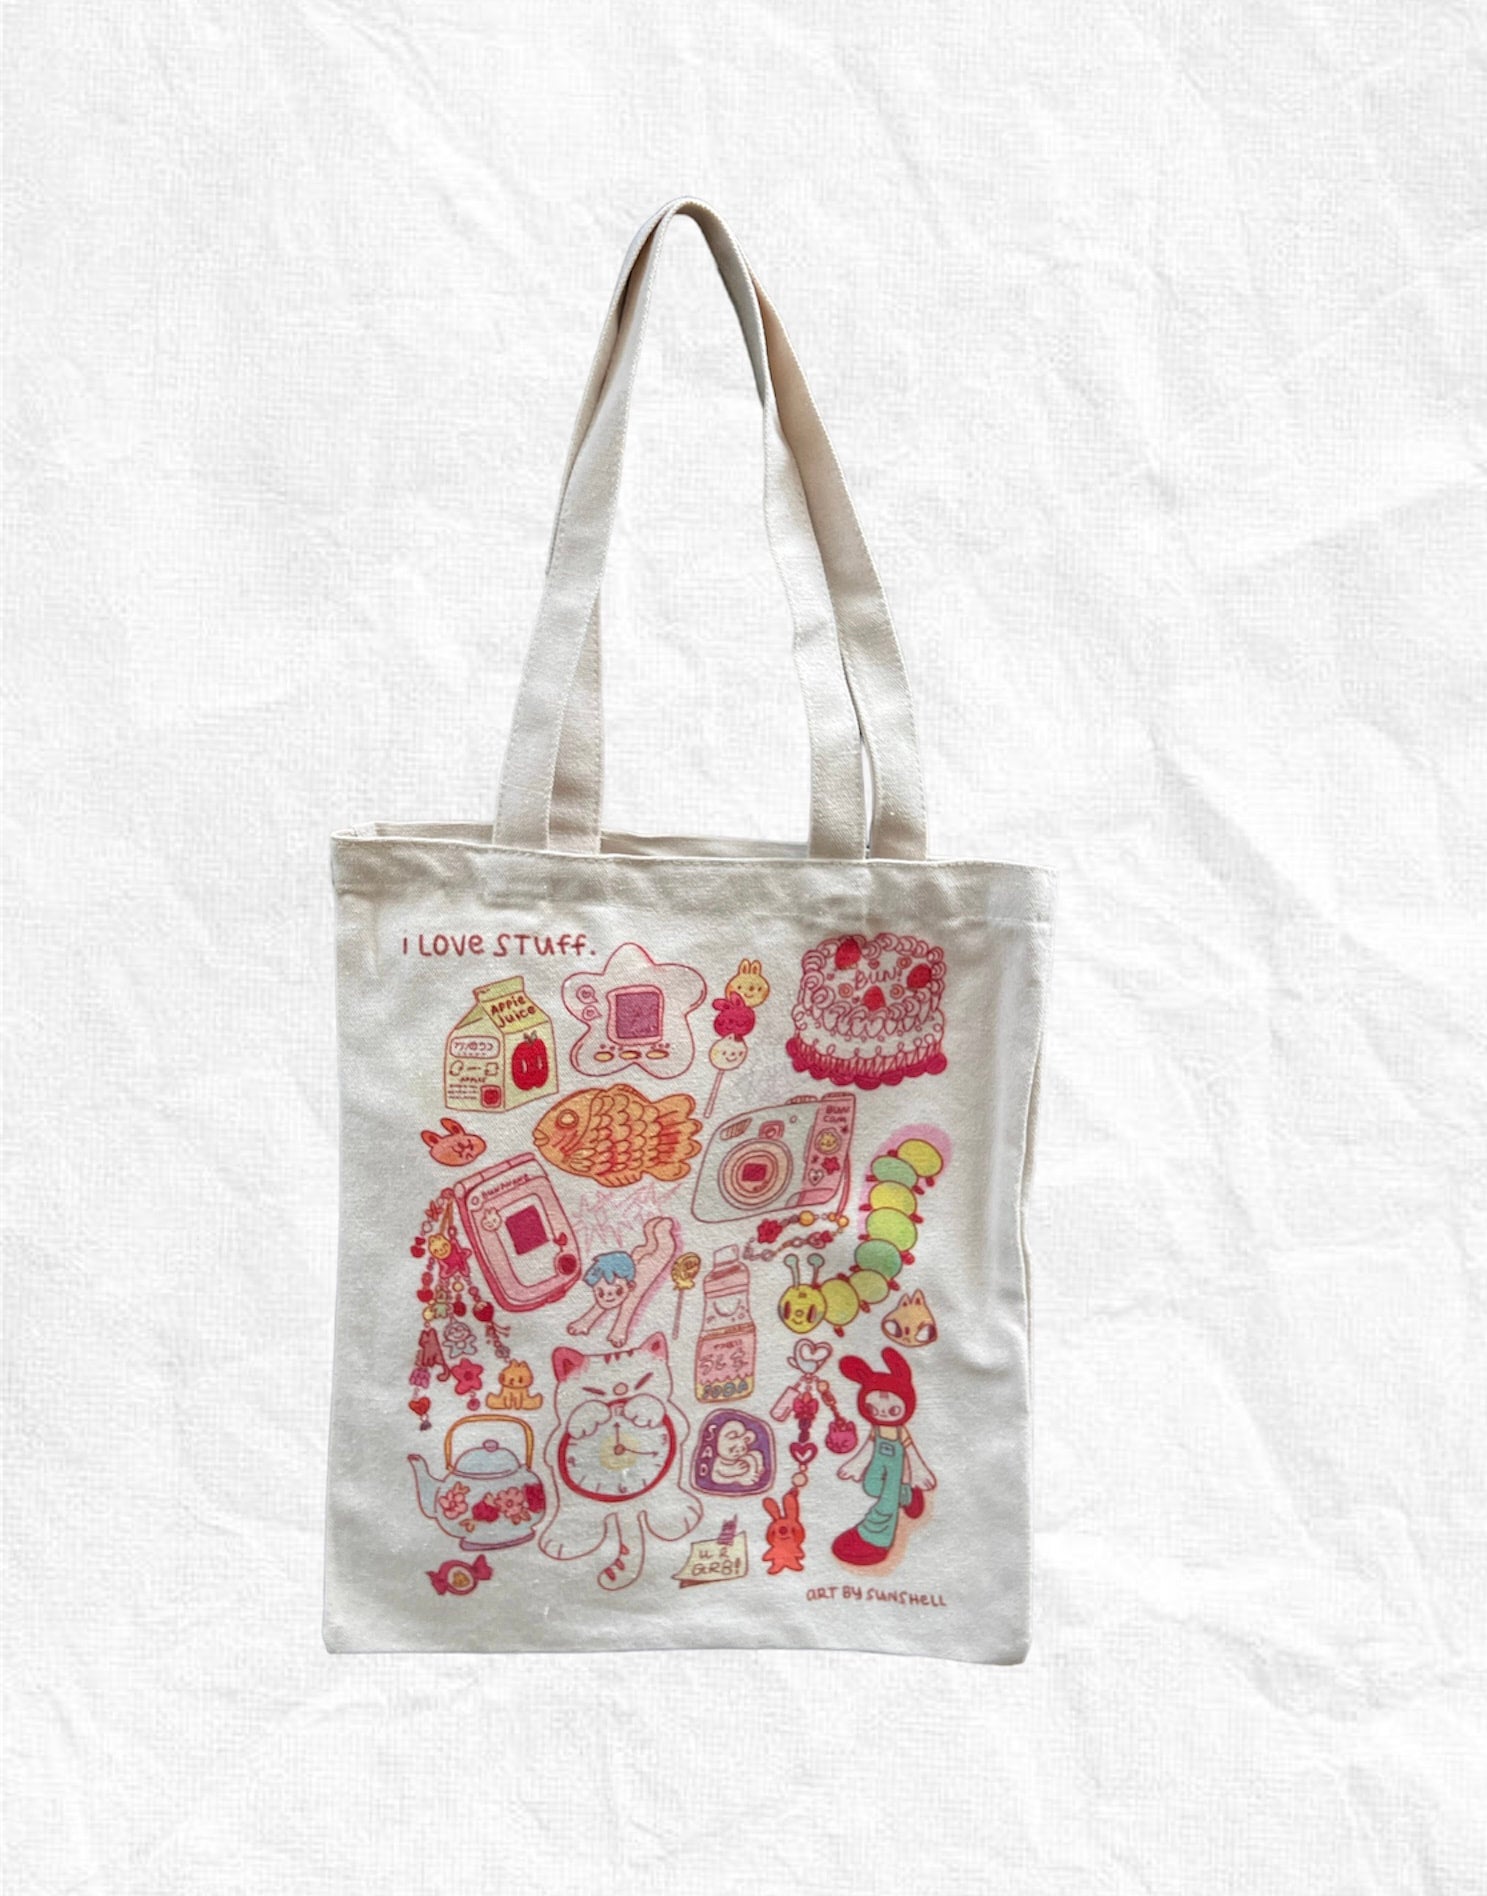 i love stuff tote bag | art by sunshell